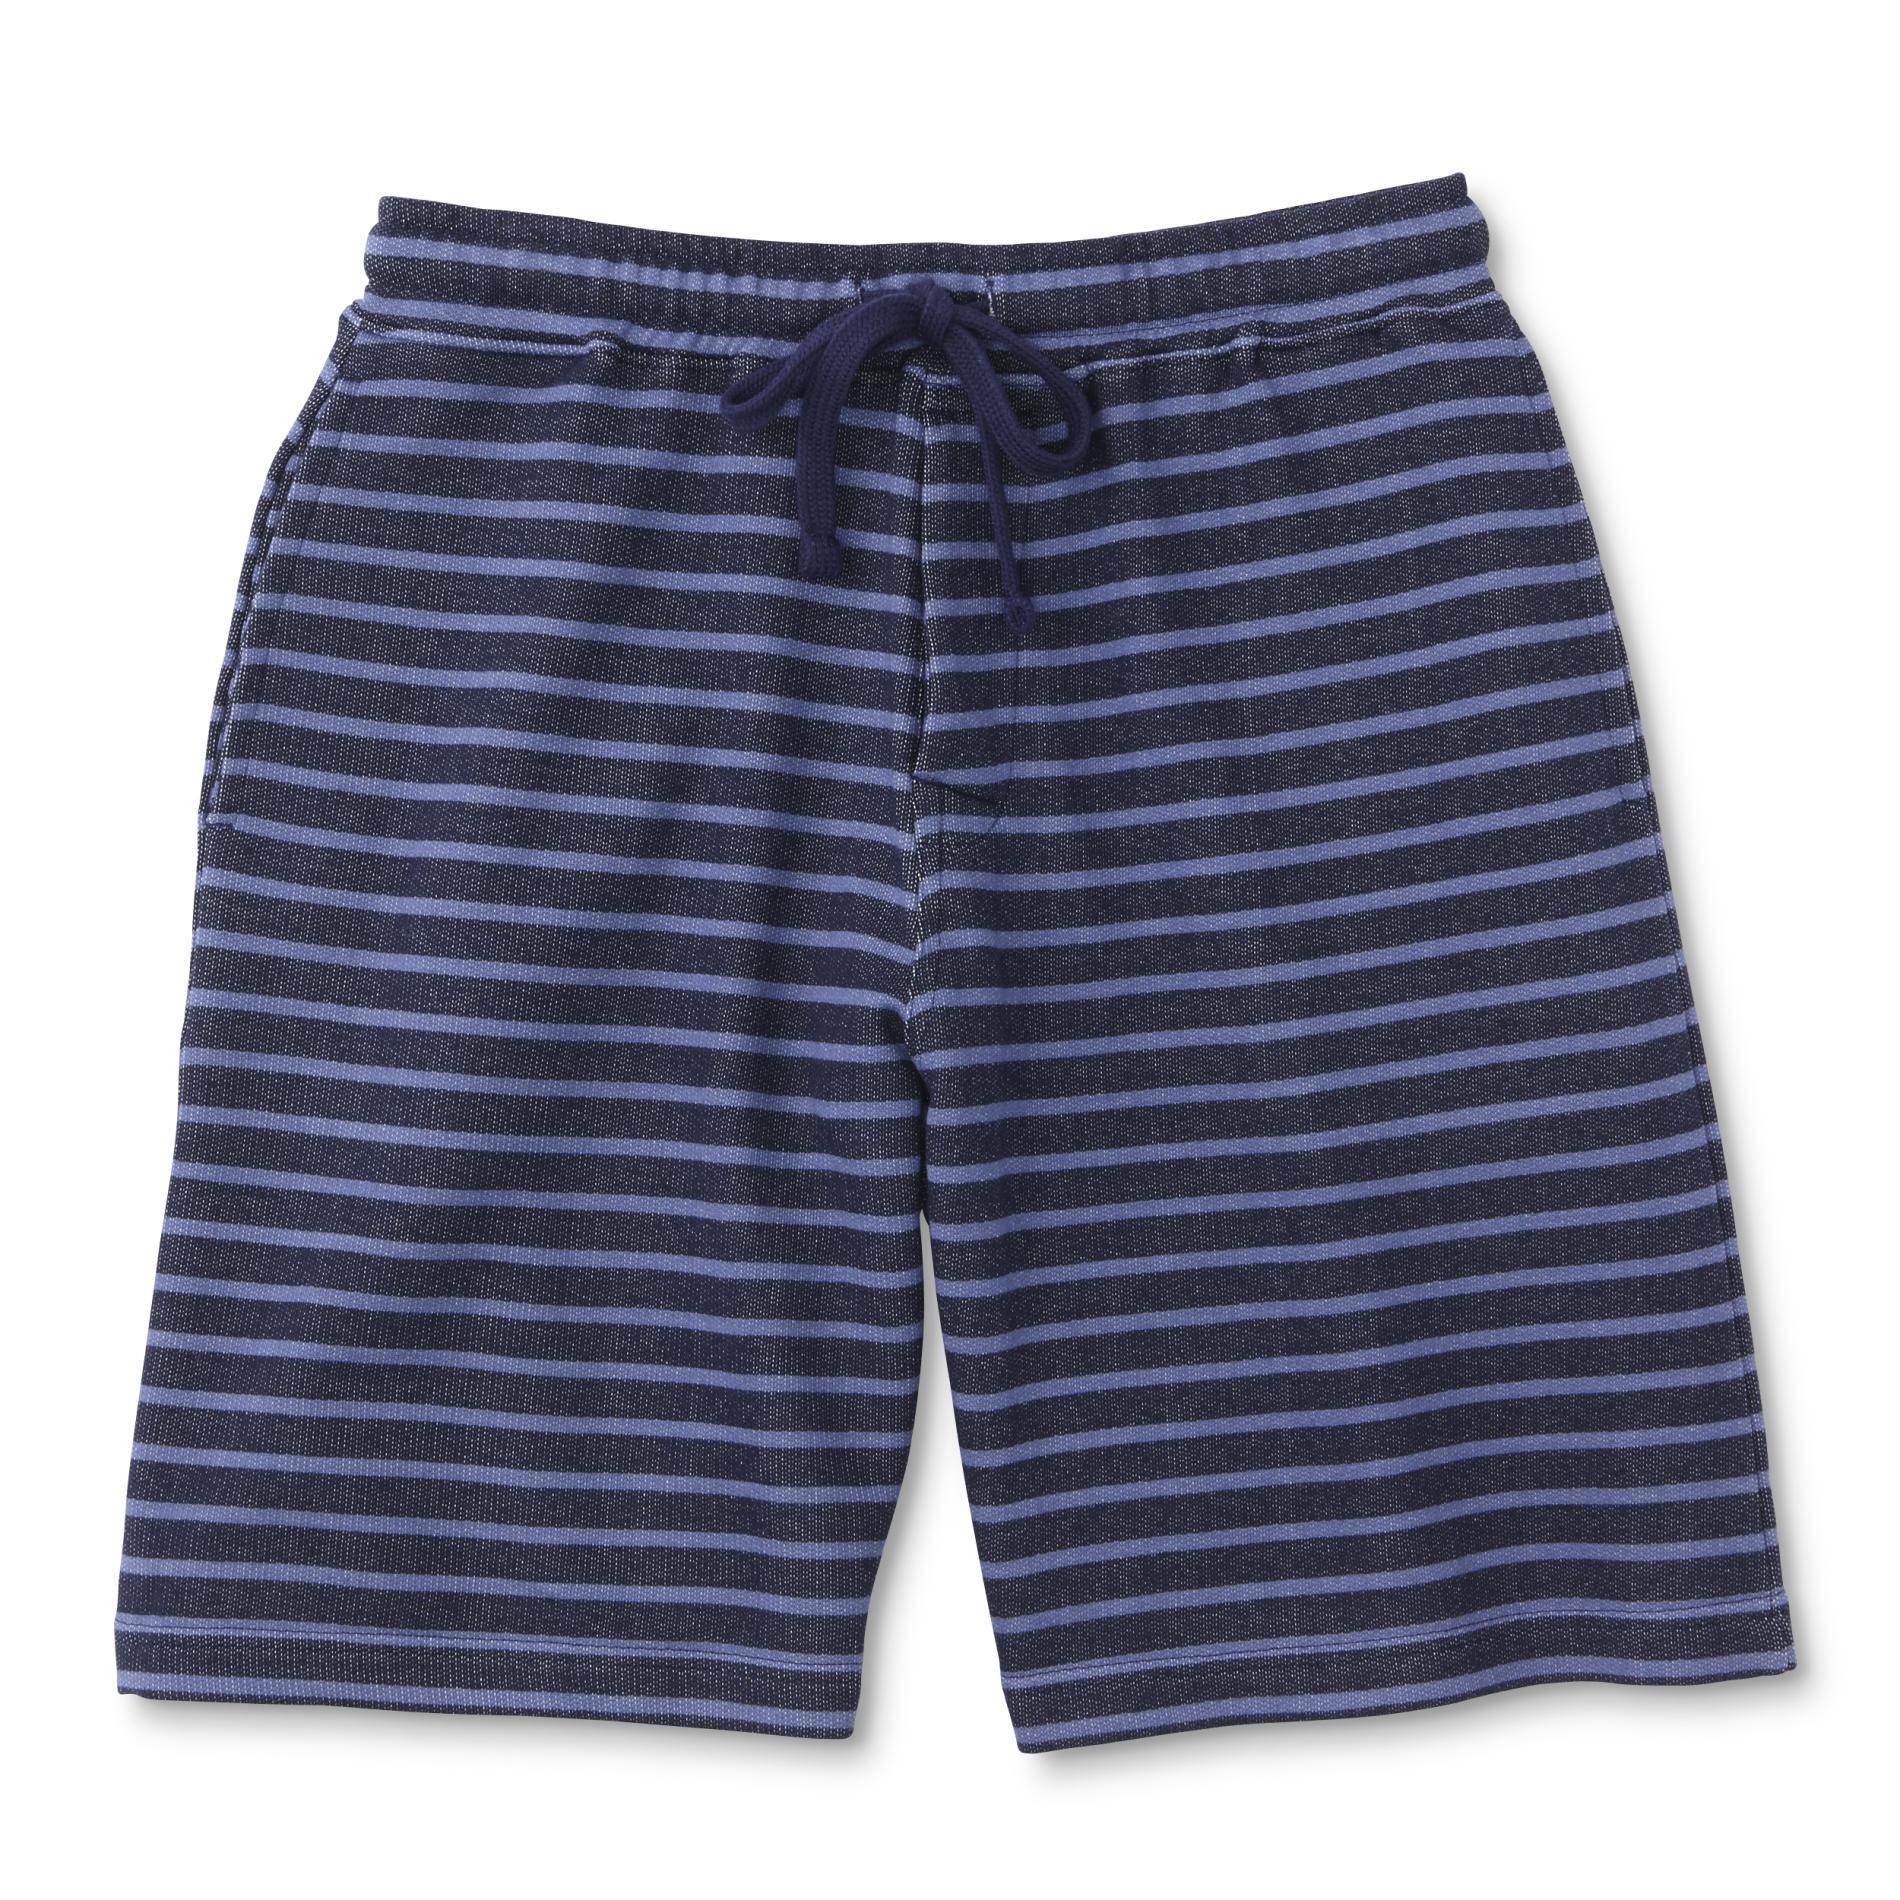 Joe Boxer Men's Pajama Shorts - Striped